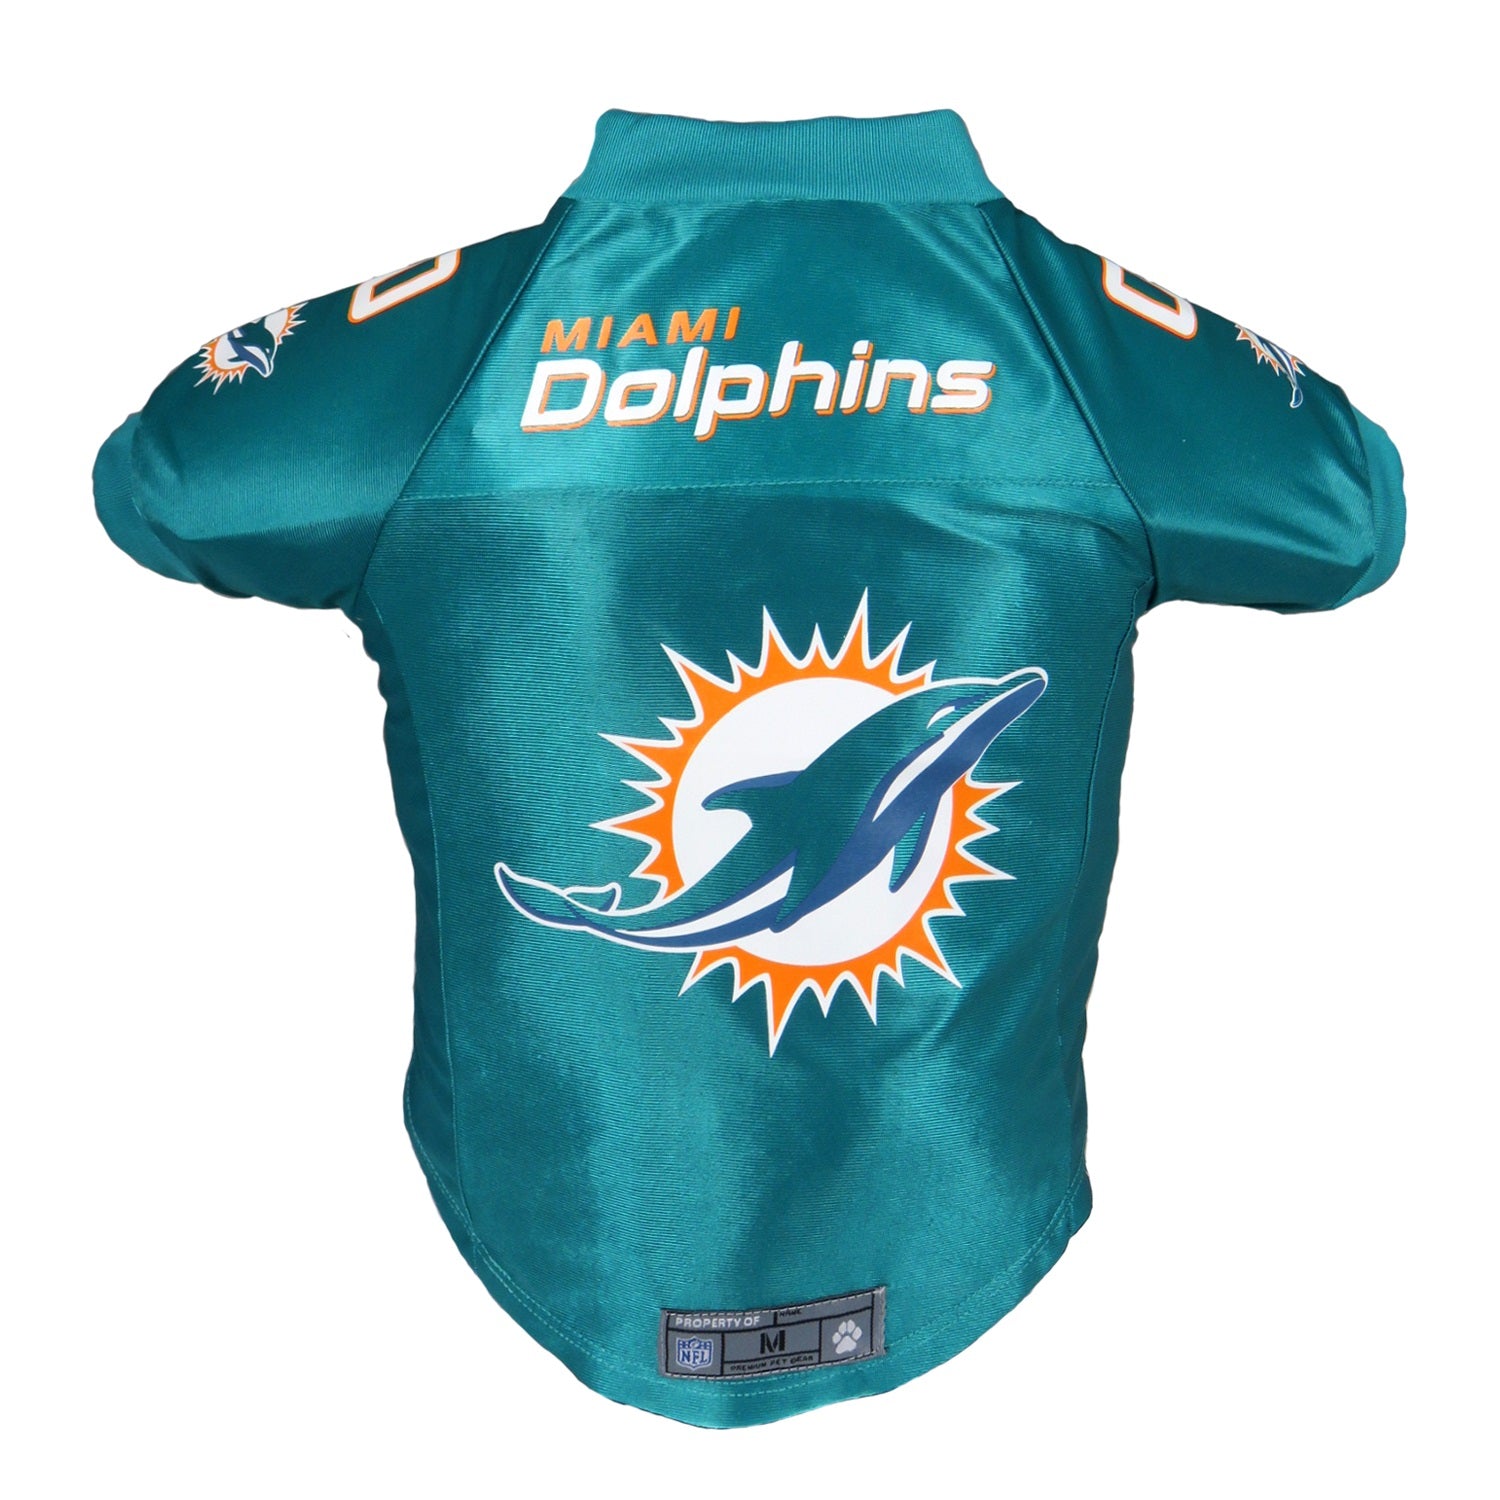 Jerseys  Miami Dolphins - dolphins.com